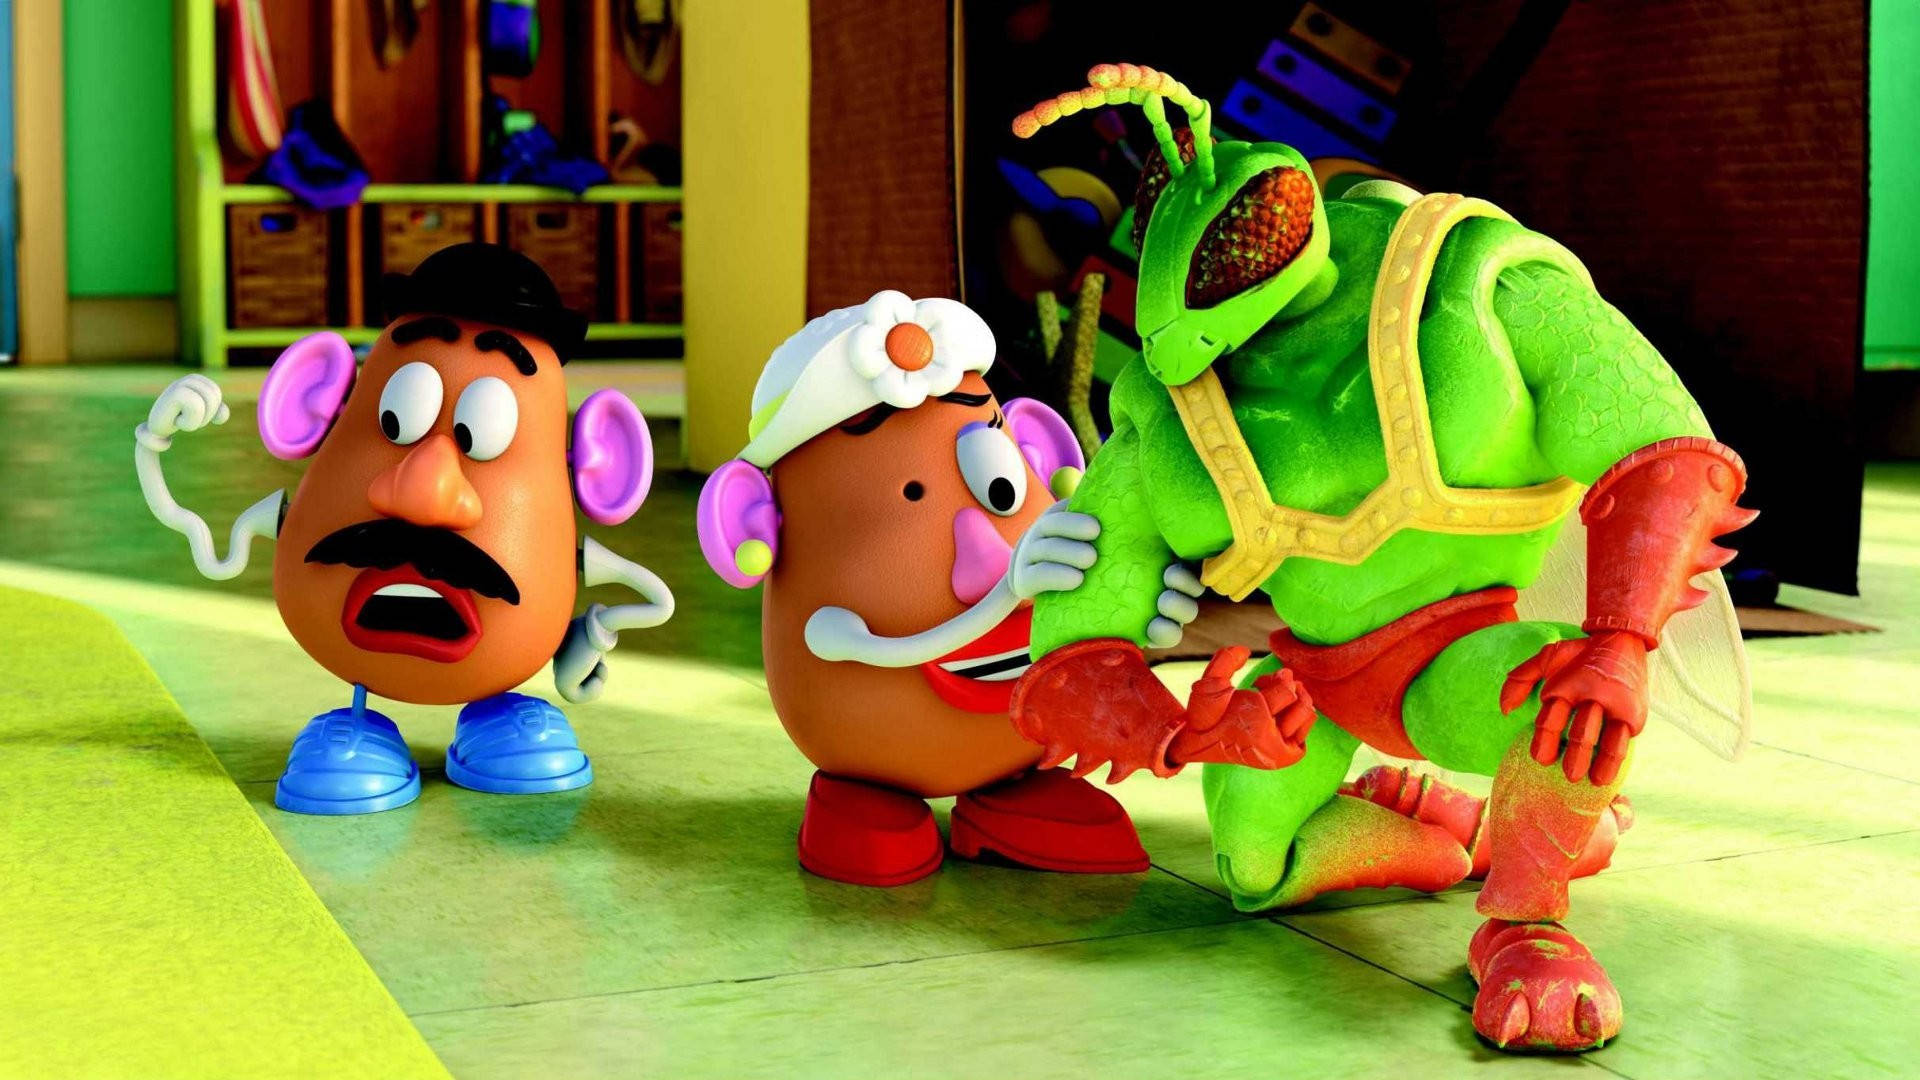 Toy Story 3 Mr.&Mrs. Potato Head Wallpaper